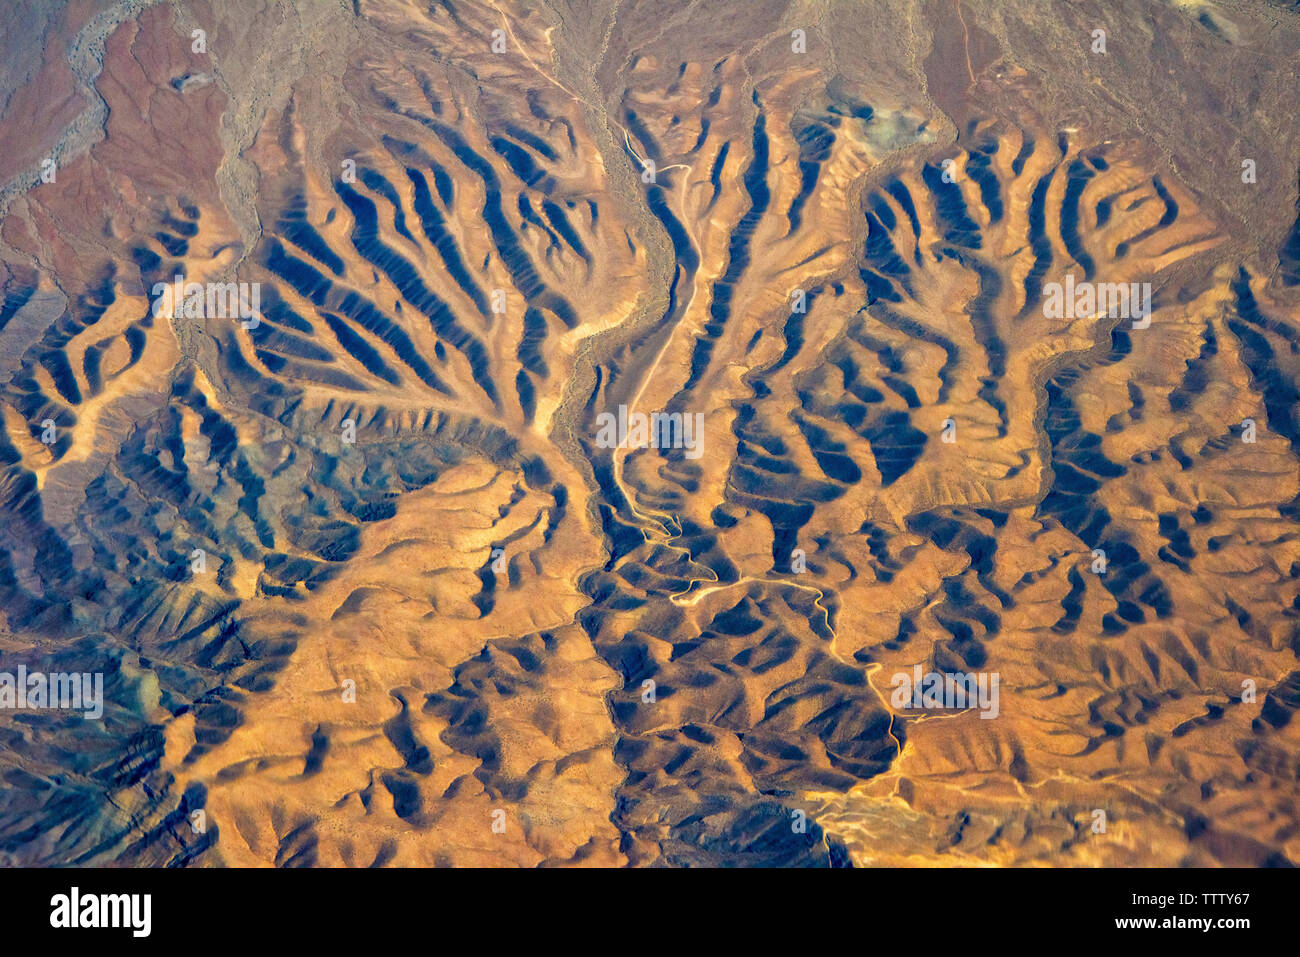 Aerial view of land pattern on Atacama Desert, Chile Stock Photo